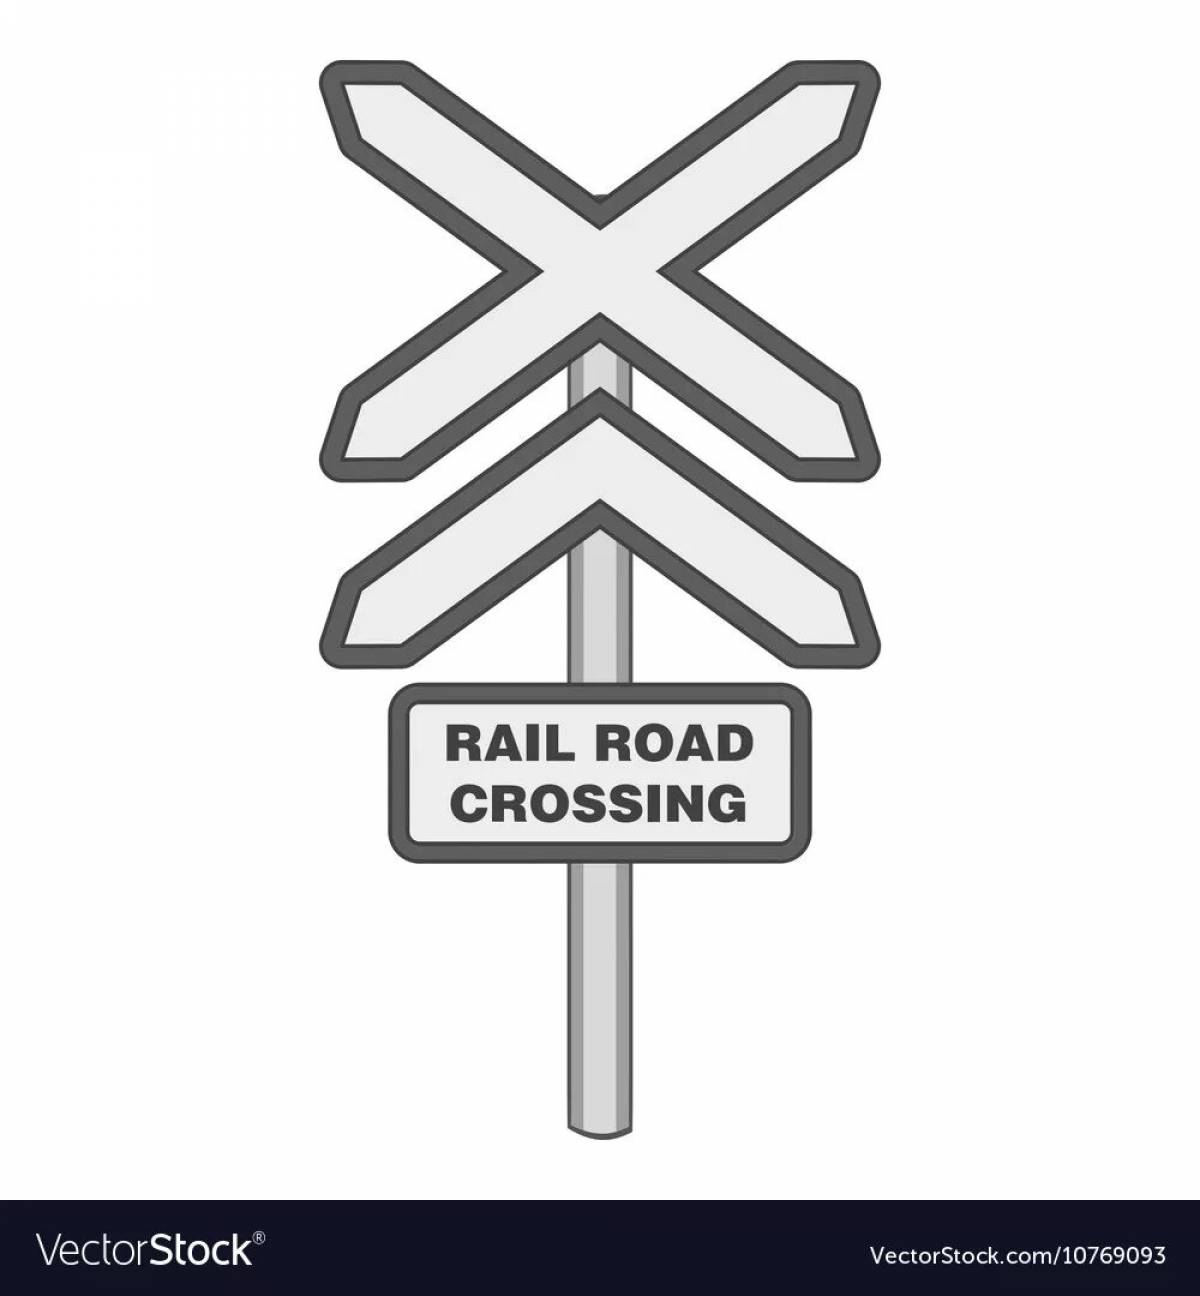 Railway crossing #4